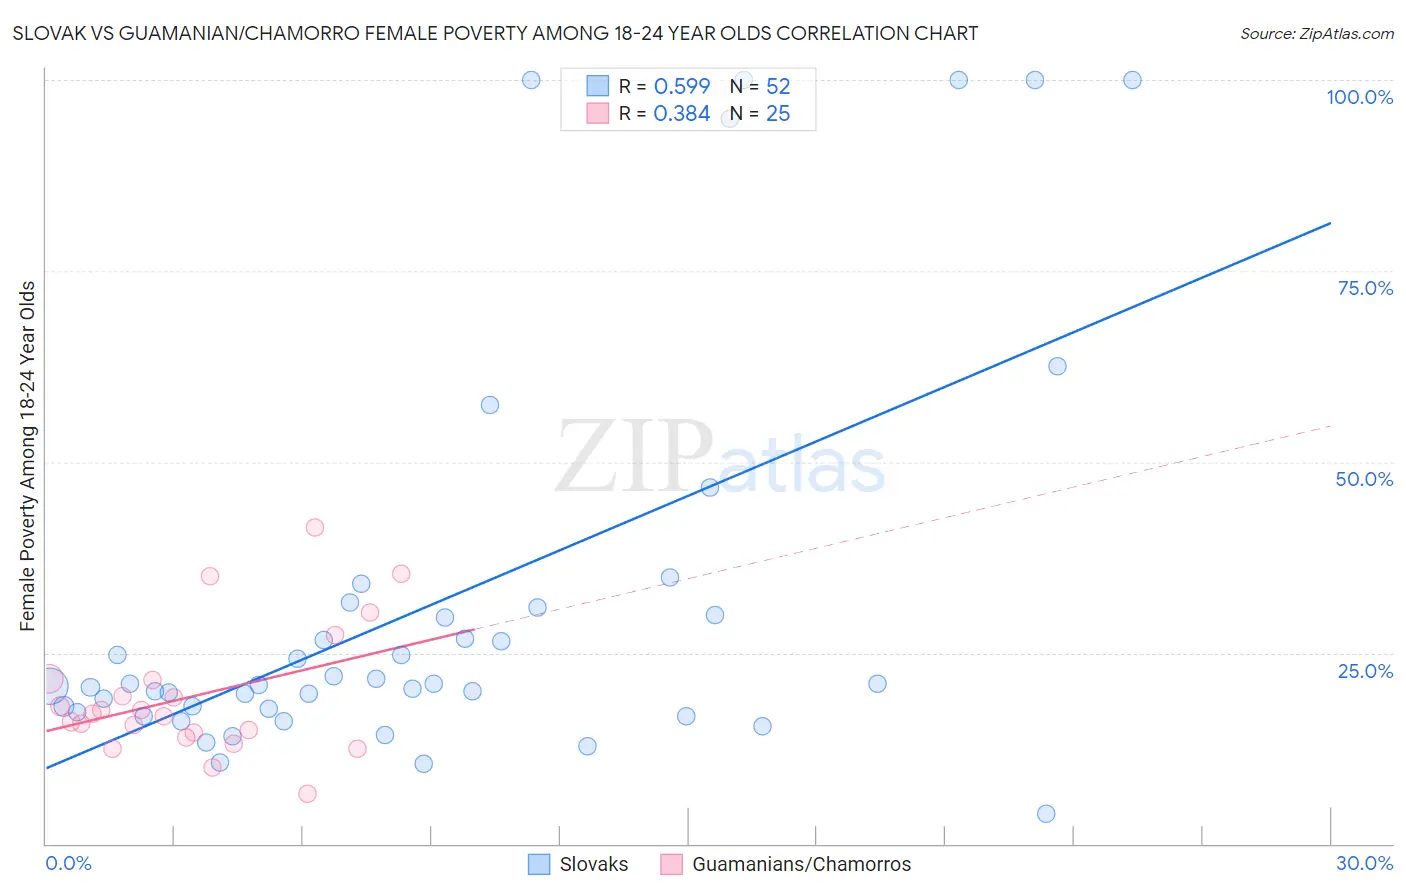 Slovak vs Guamanian/Chamorro Female Poverty Among 18-24 Year Olds